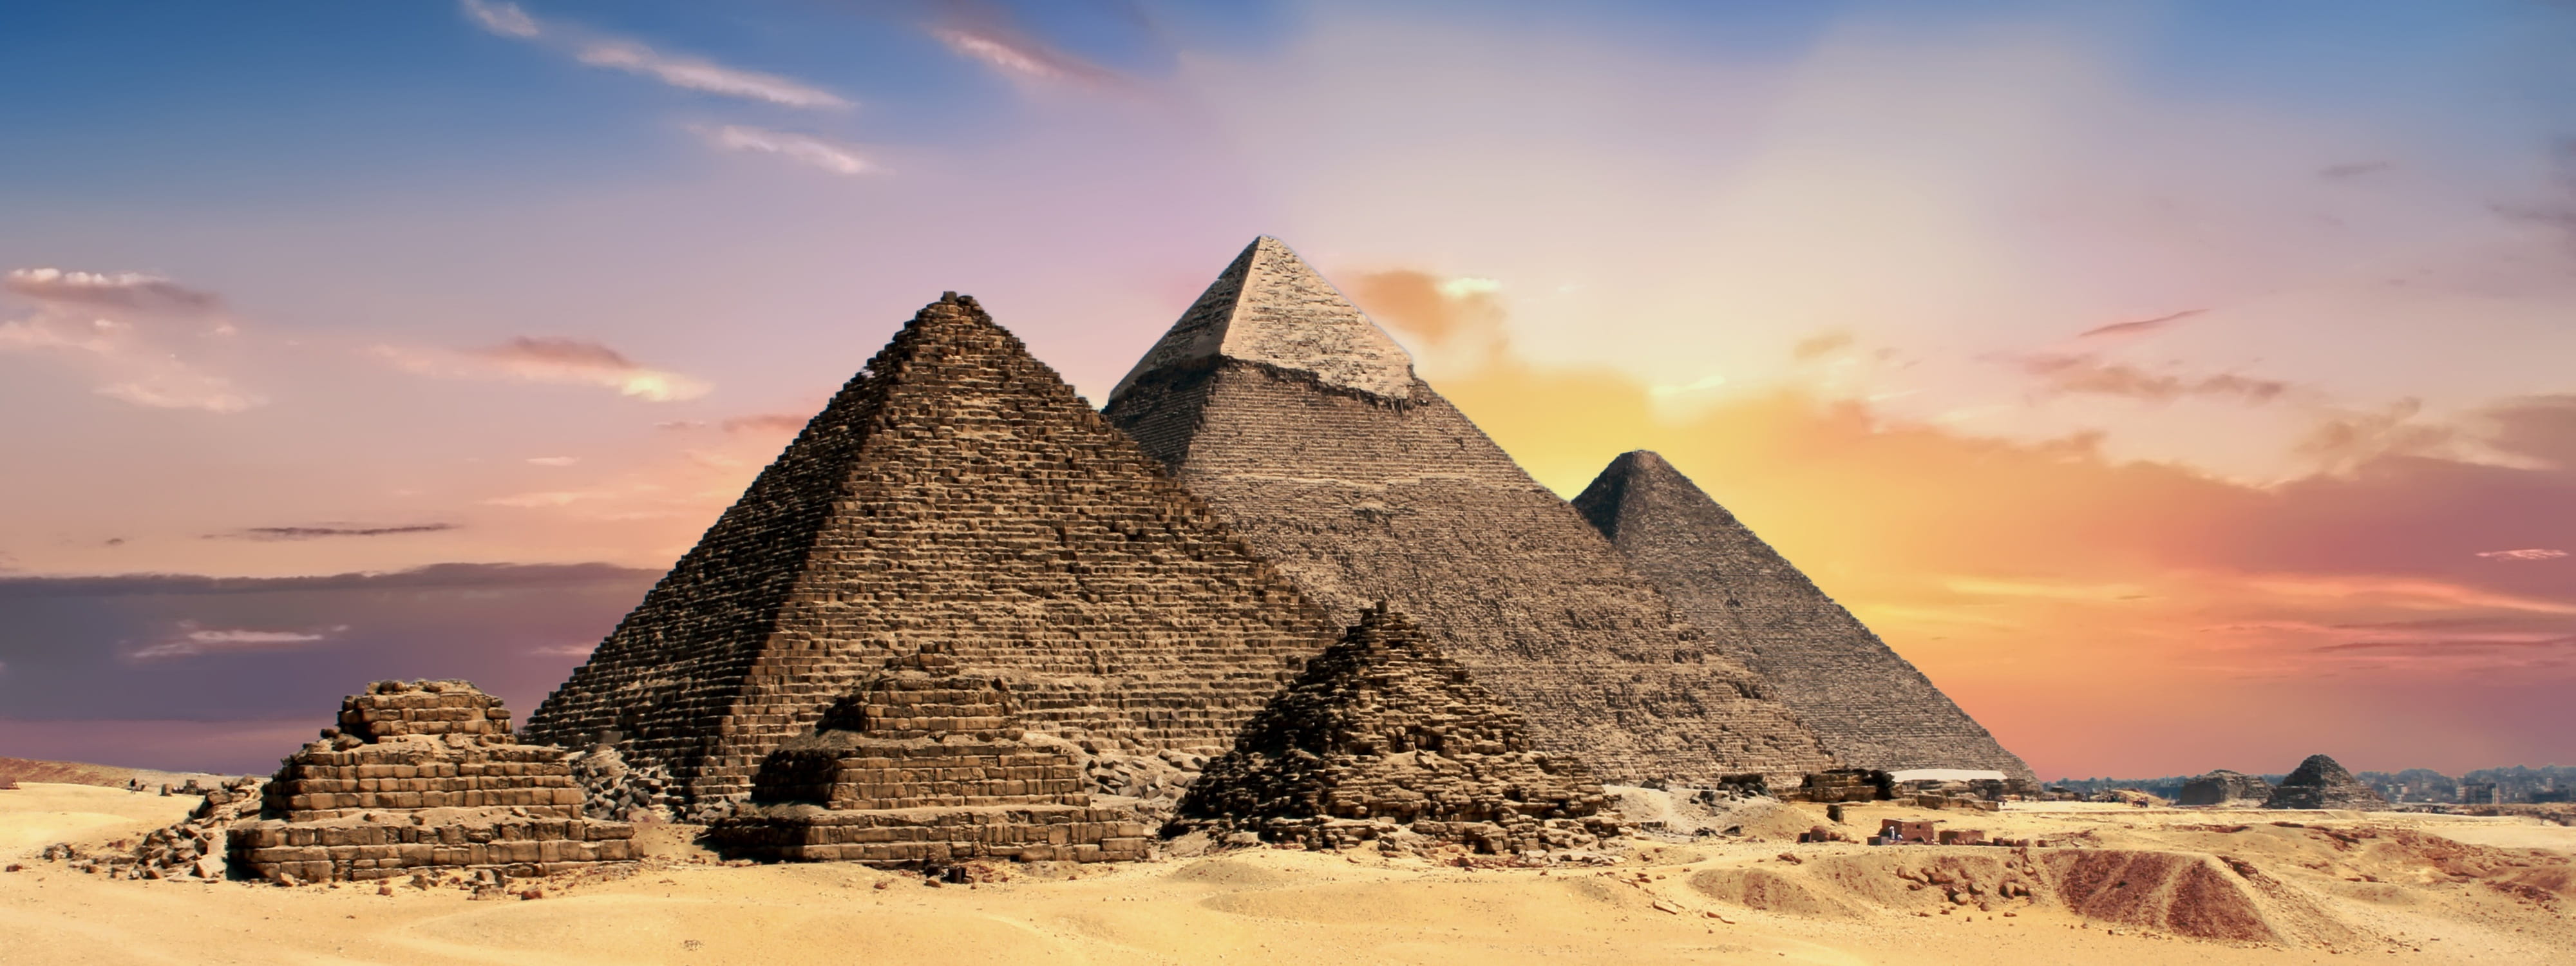 Pyramid under gray and orange clouds, photo, pyramids, egypt